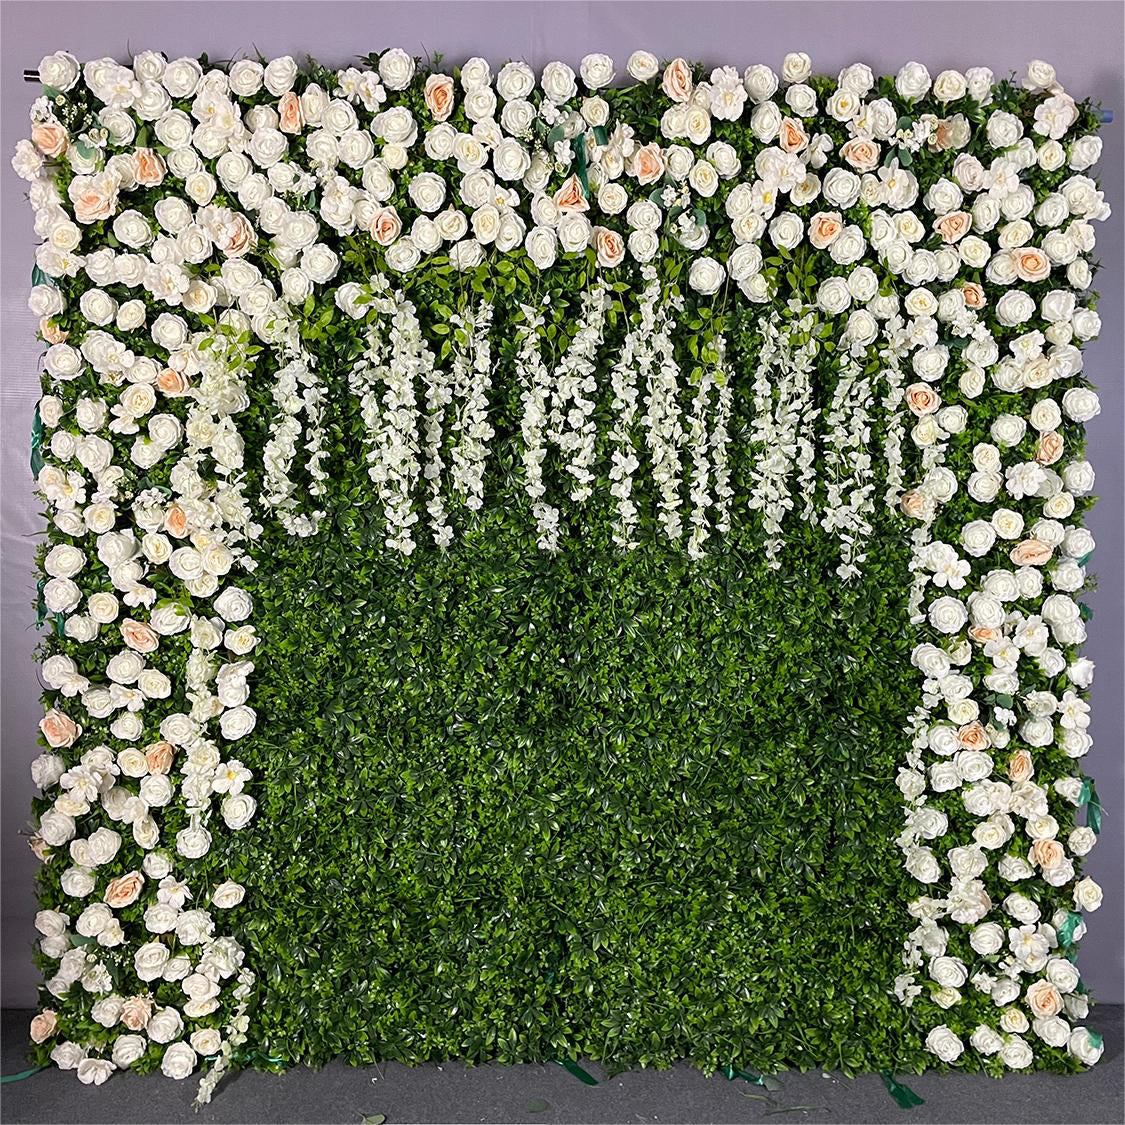 3D Artificial Flower Wall Arrangement Wedding Party Birthday Backdrop Decor HQ3705